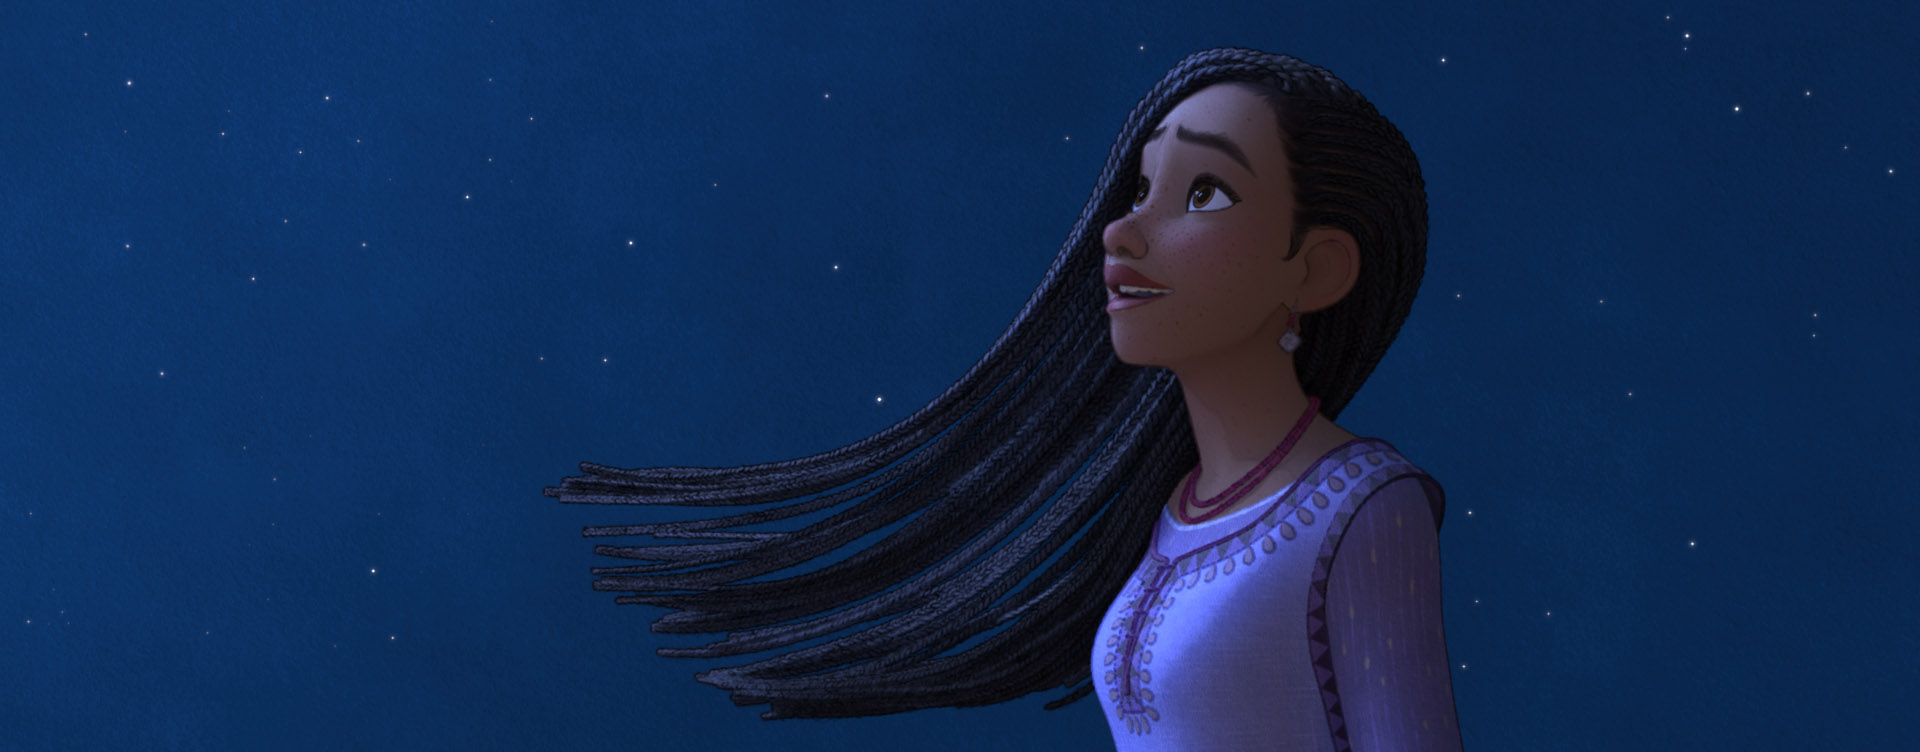 New Trailer for Walt Disney Animation Studios’ “Wish” Revealed